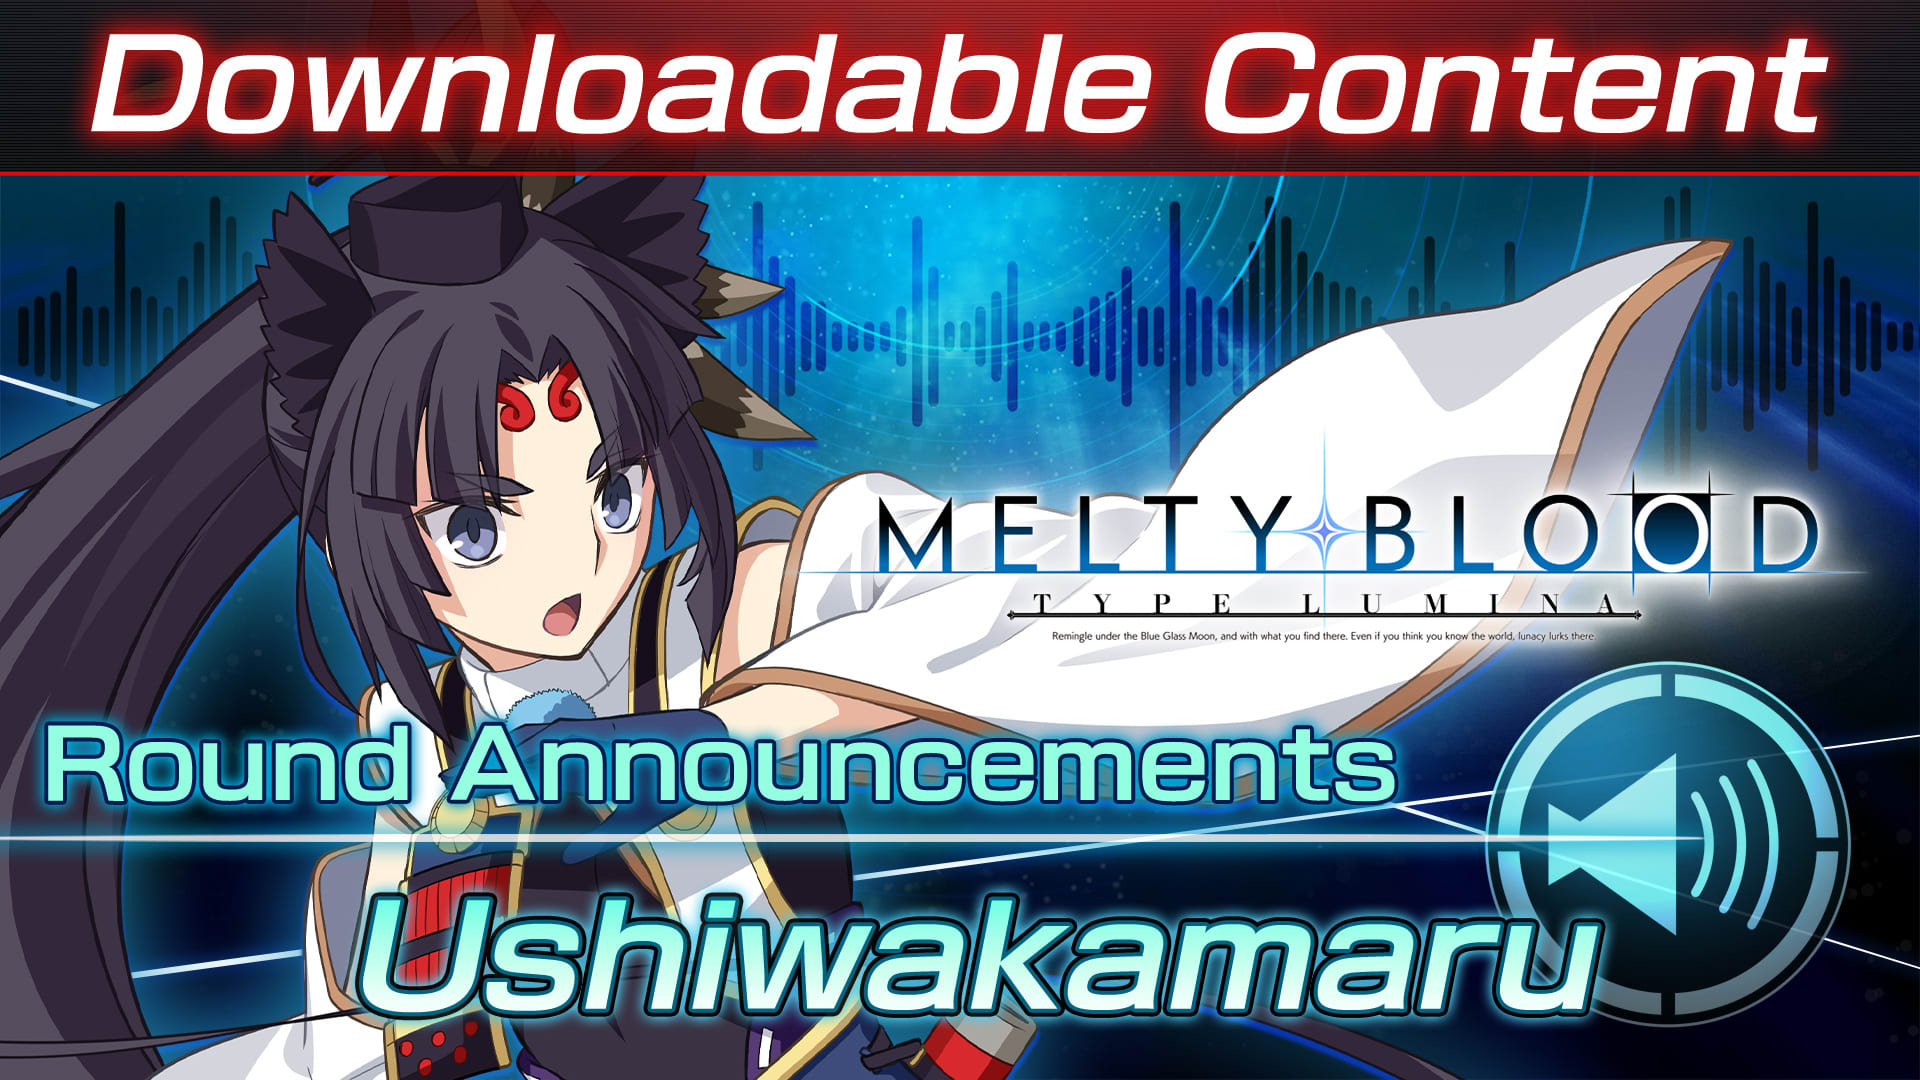 DLC: Ushiwakamaru Round Announcements